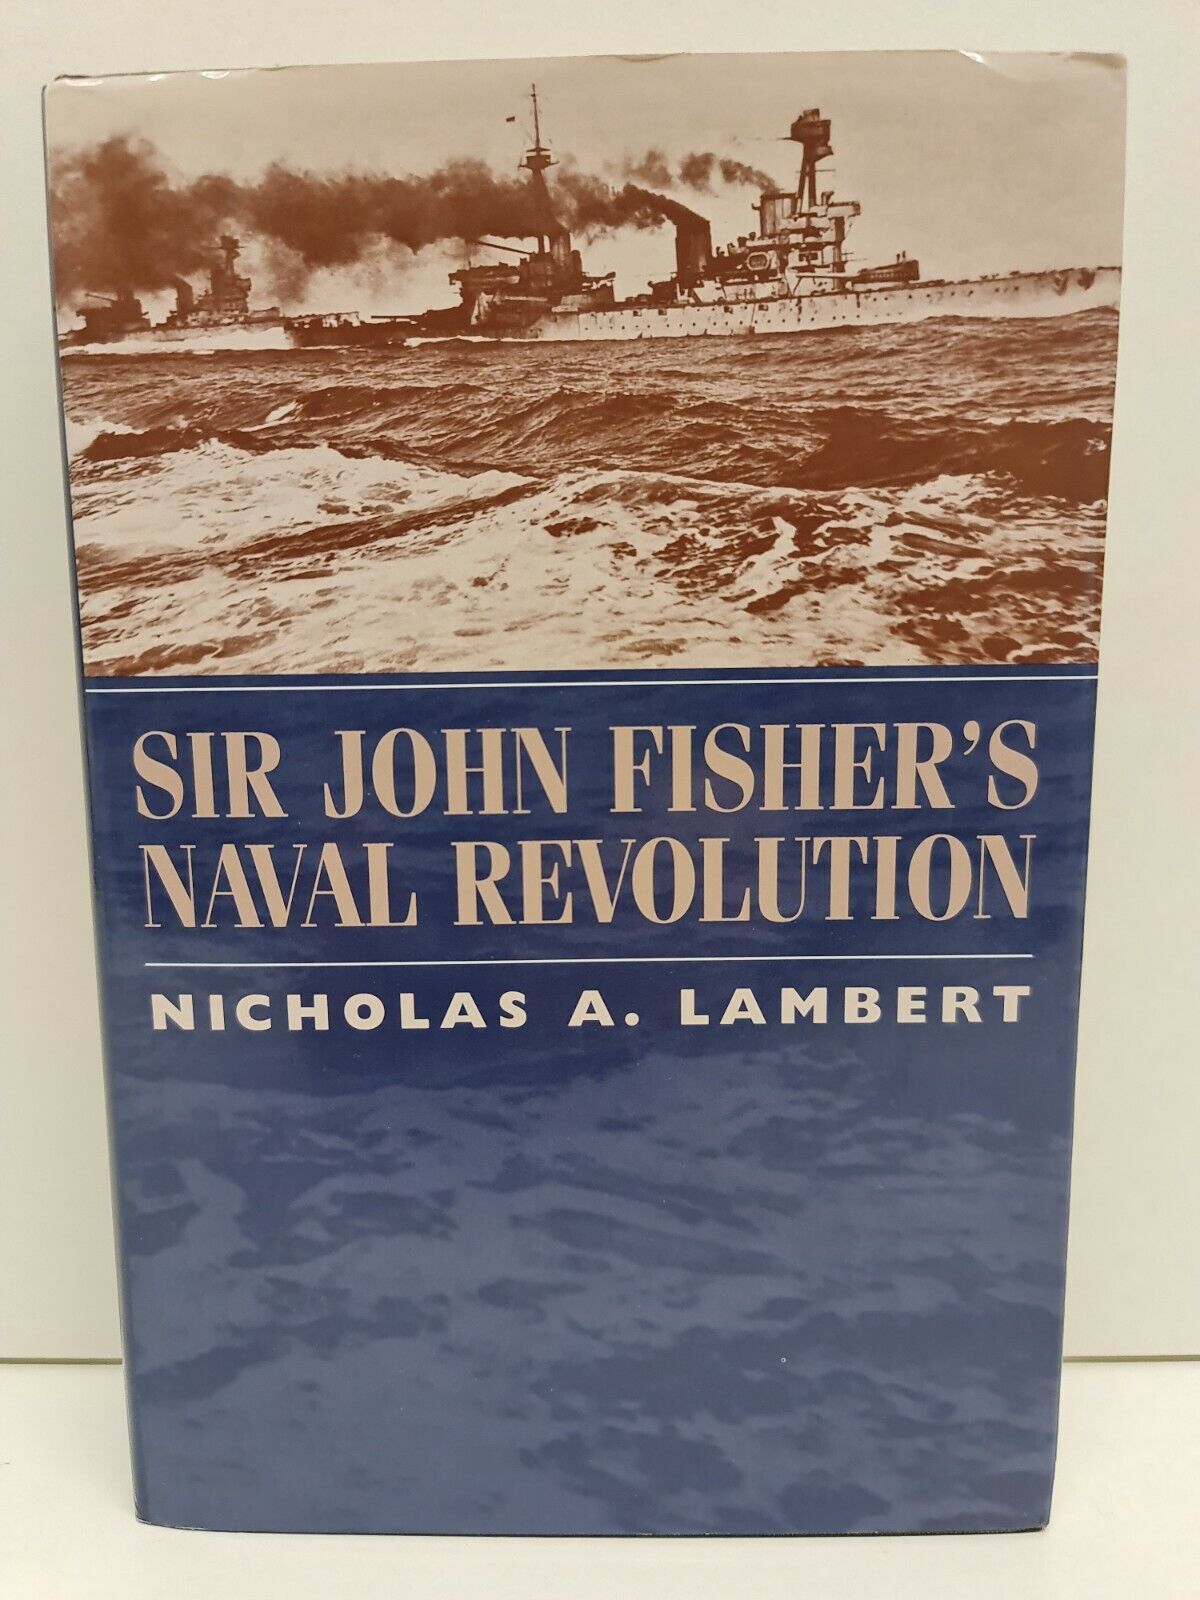 Sir John Fisher's Naval Revolution by Nicholas A. Lambert (1999)